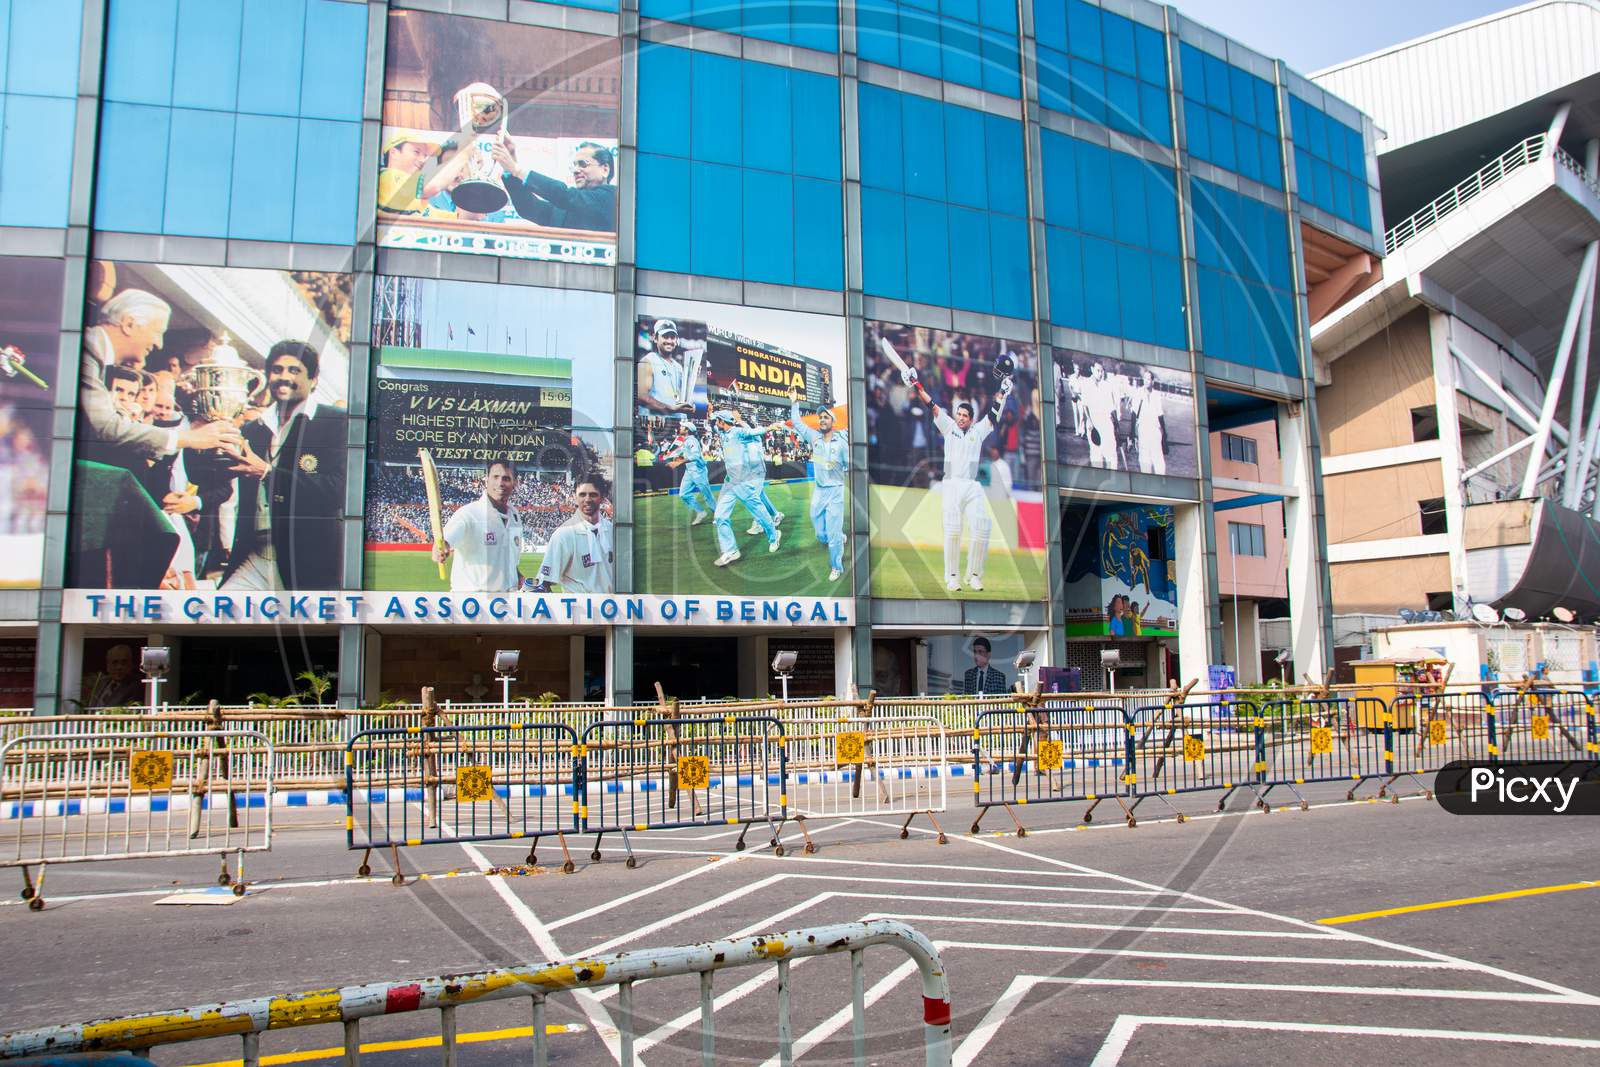 Eden Gardens cricket stadium, Kolkata, India. First over day and night test match in India played at Eden gardens in November 2019.